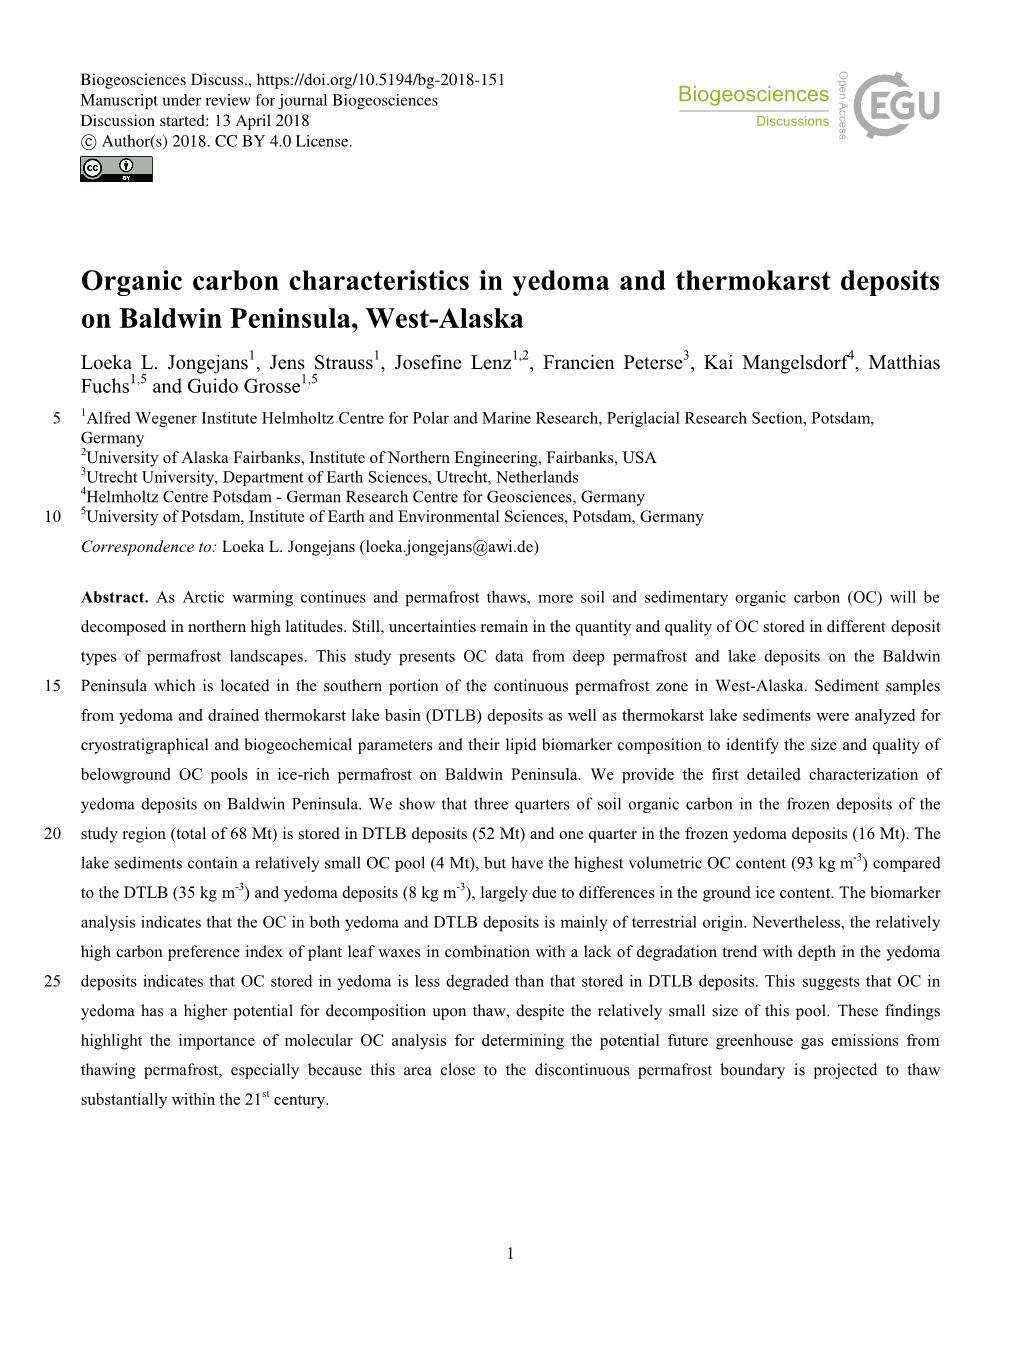 Organic Carbon Characteristics in Yedoma and Thermokarst Deposits on Baldwin Peninsula, West-Alaska Loeka L